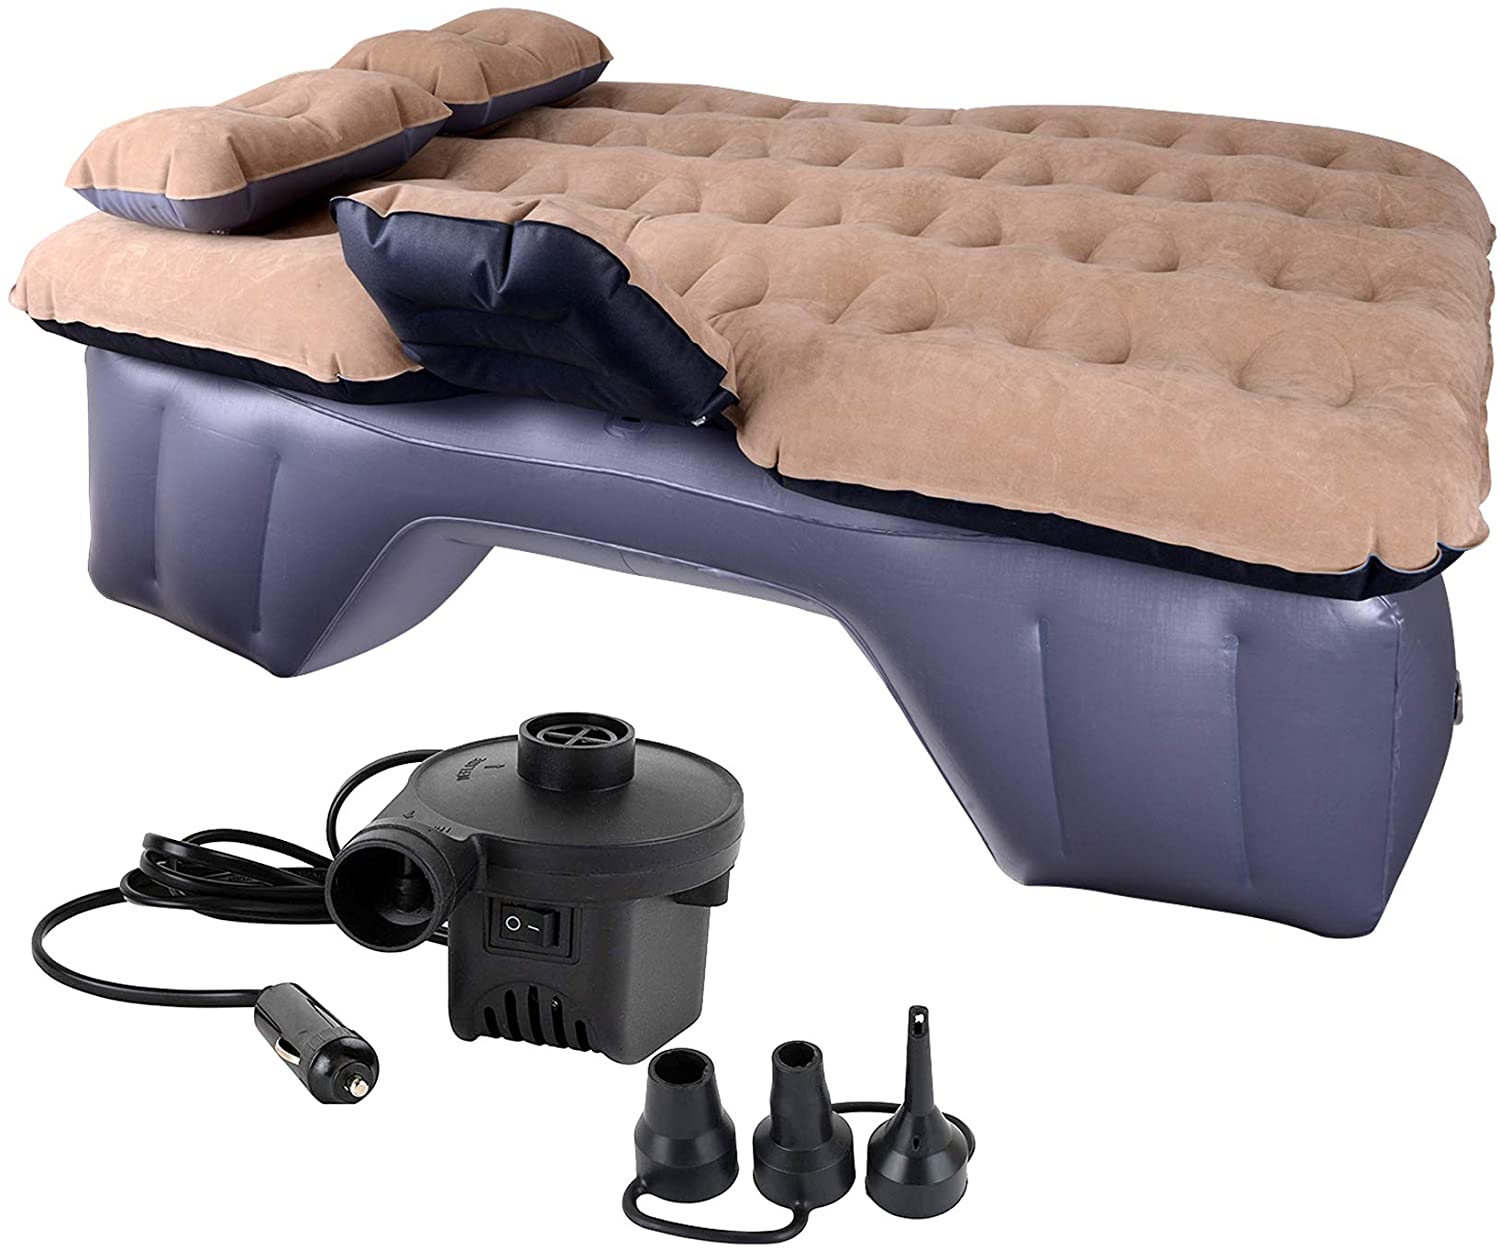 backseat air mattress f250